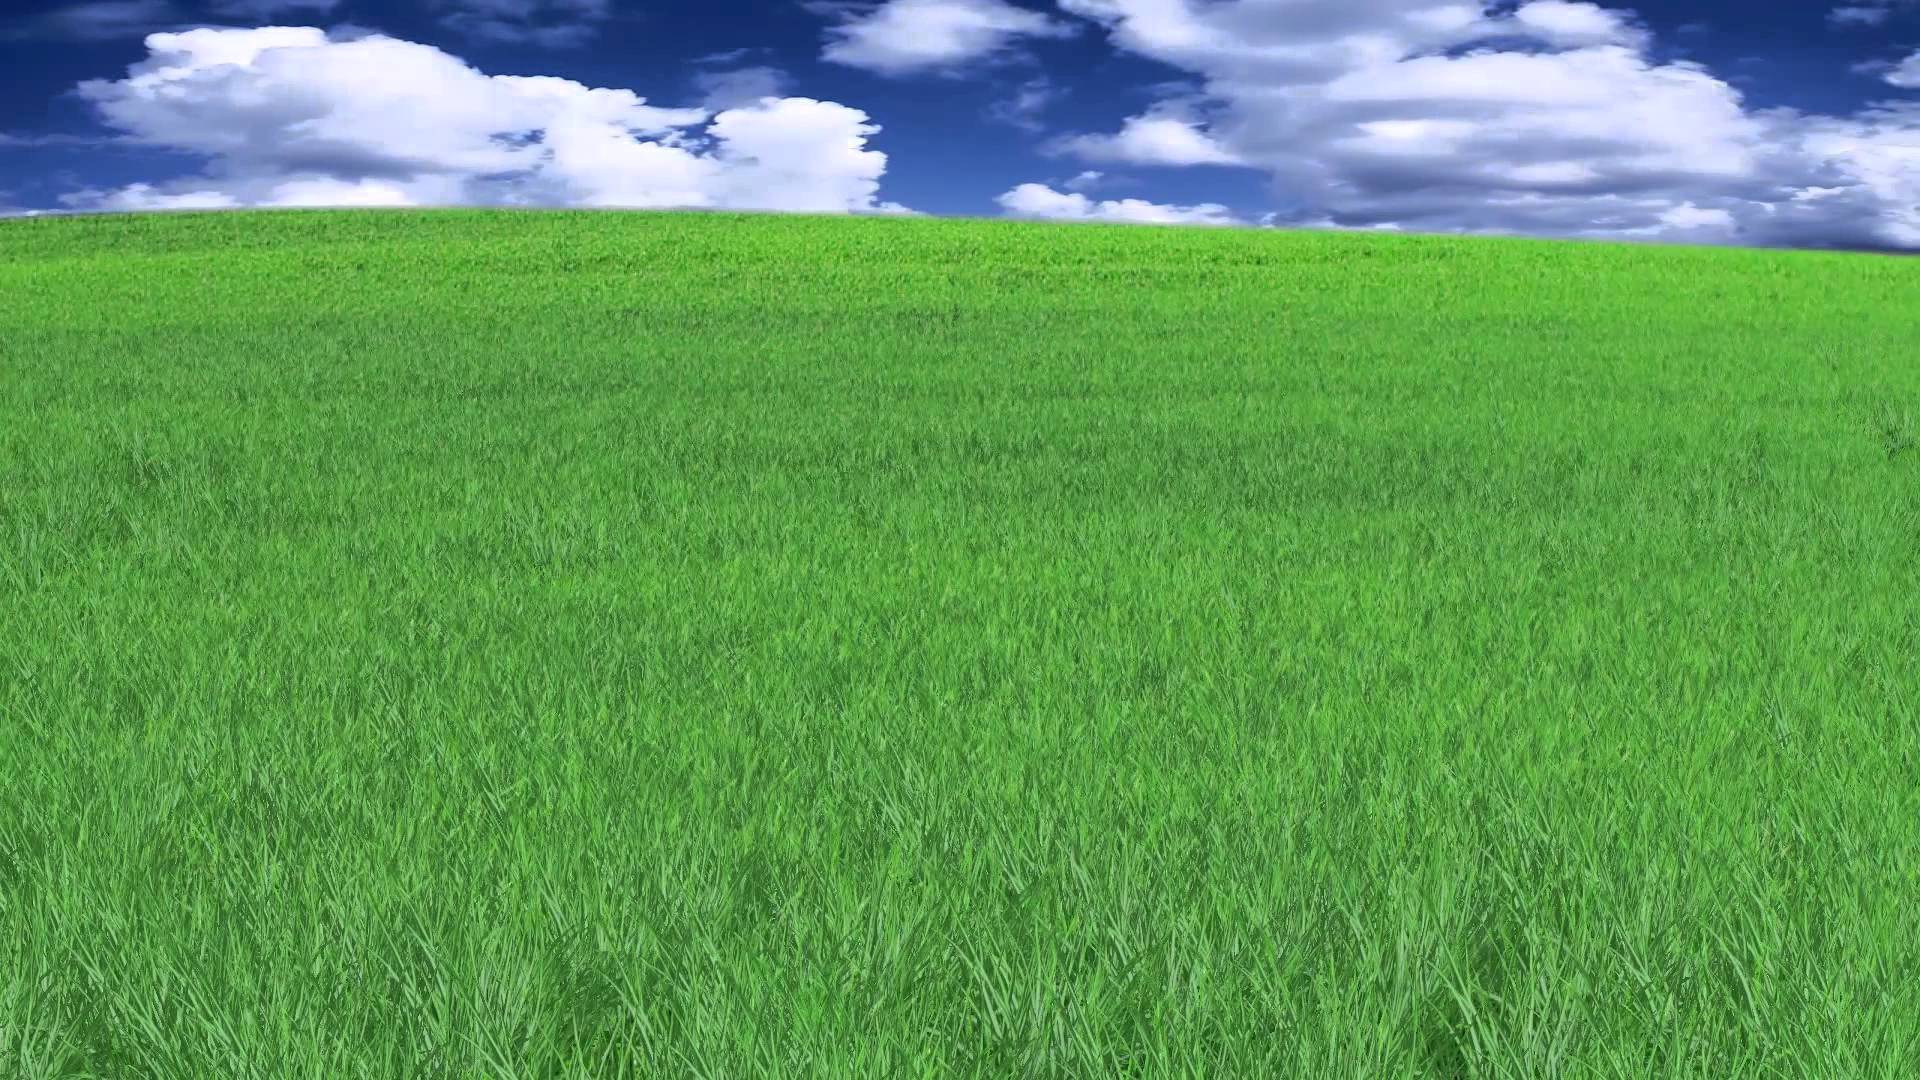 Natural Beautiful Grass Animation - YouTube